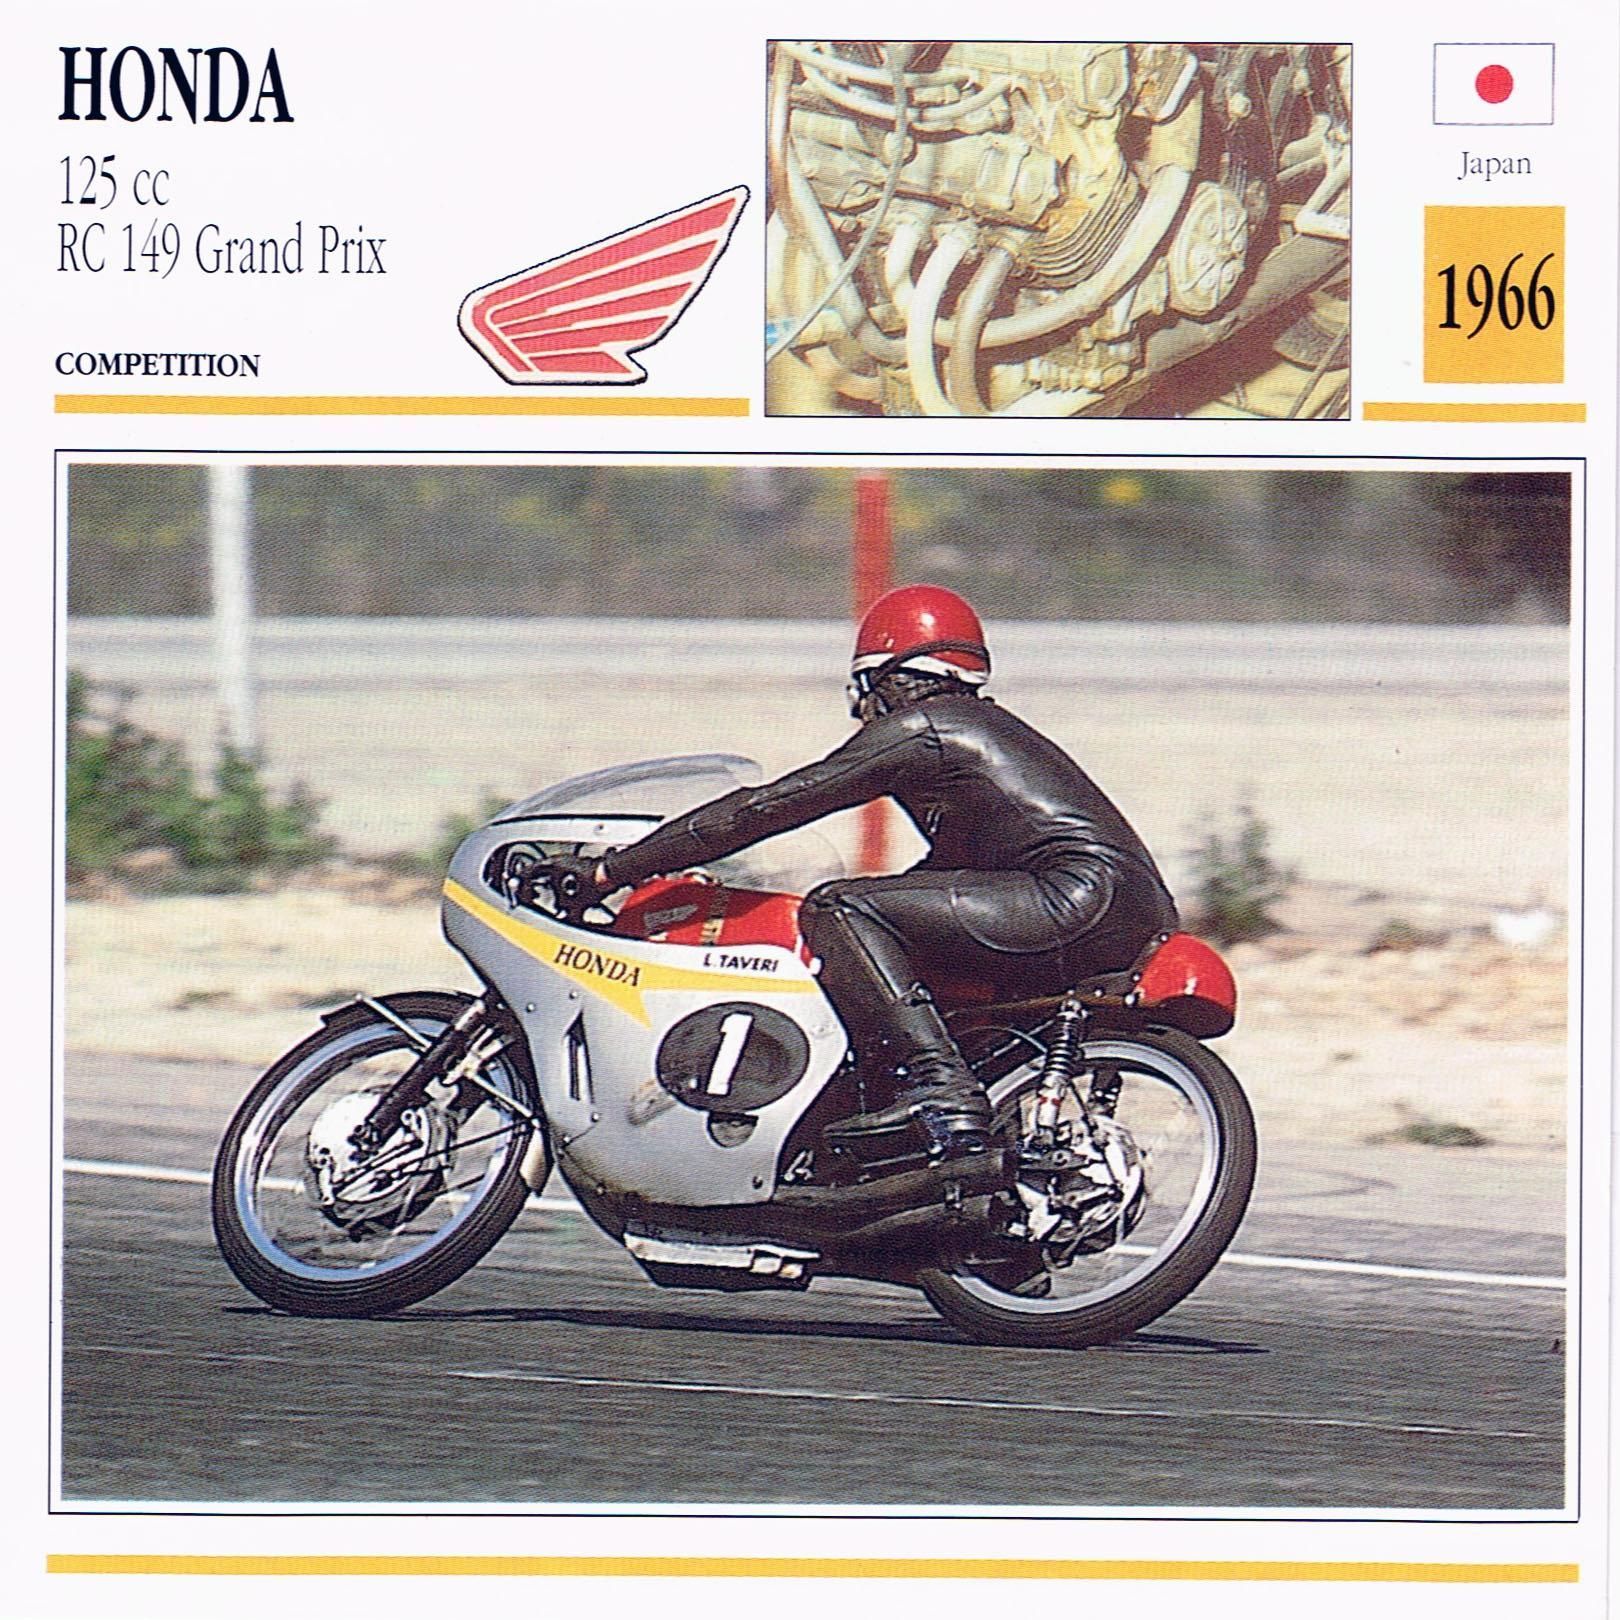 1966 Honda 125 Cc Rc 149 Grand Prix Bike Eatsleepride